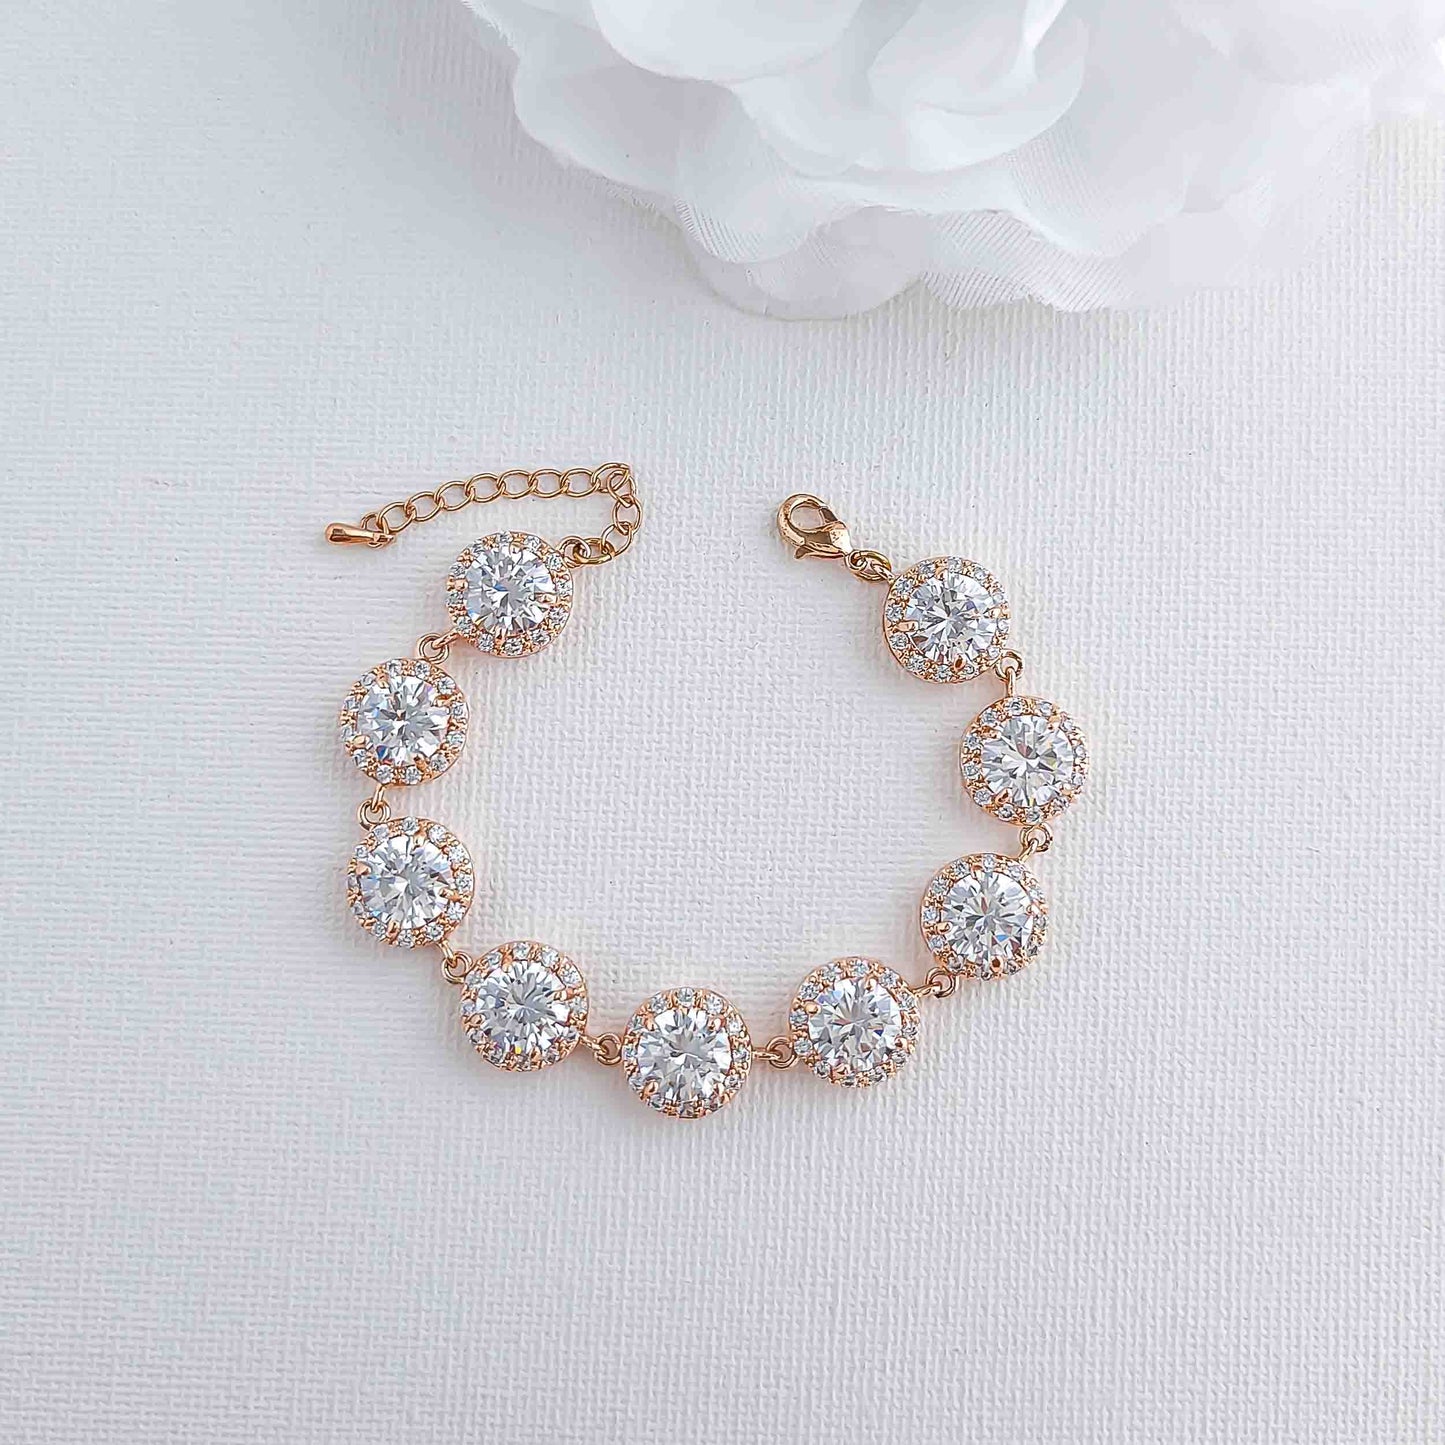 Bracelet de mariage en or rose, bracelet de mariée en cristal, bijoux de mariage, bracelet en zircon cubique en or rose, Evita